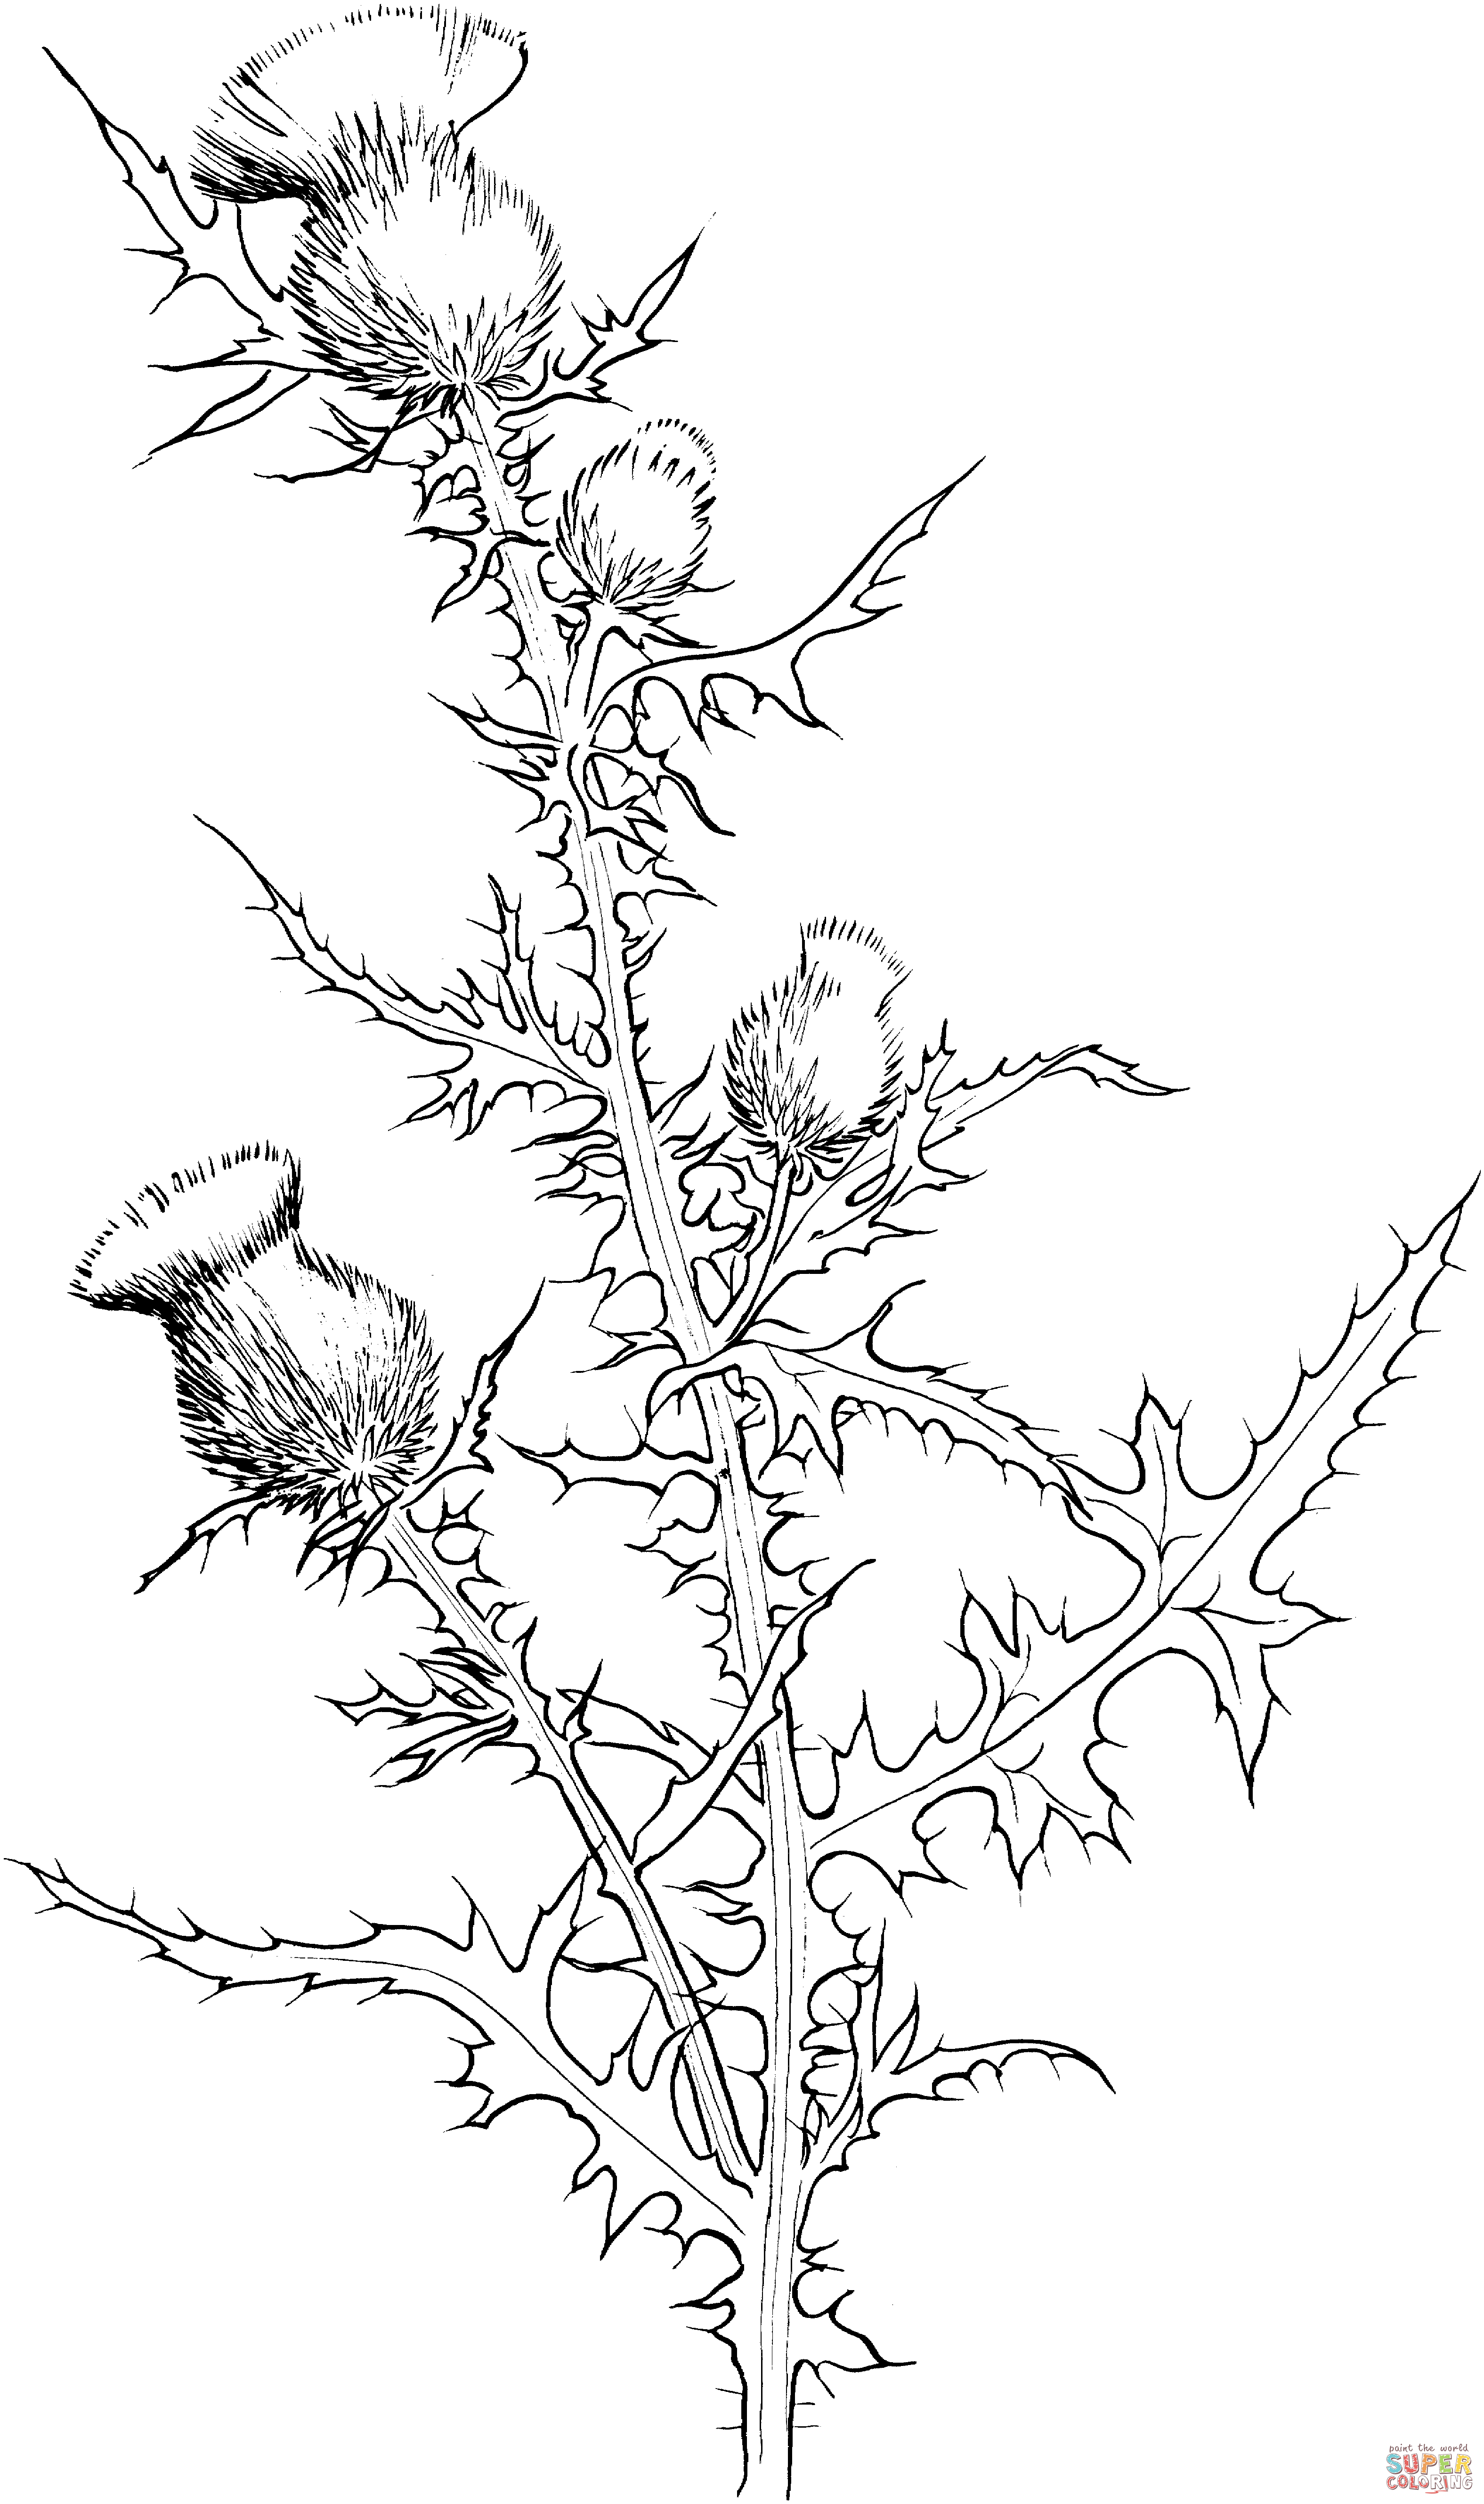 Cirsium Vulgare ou Chardon Bull de Thistle